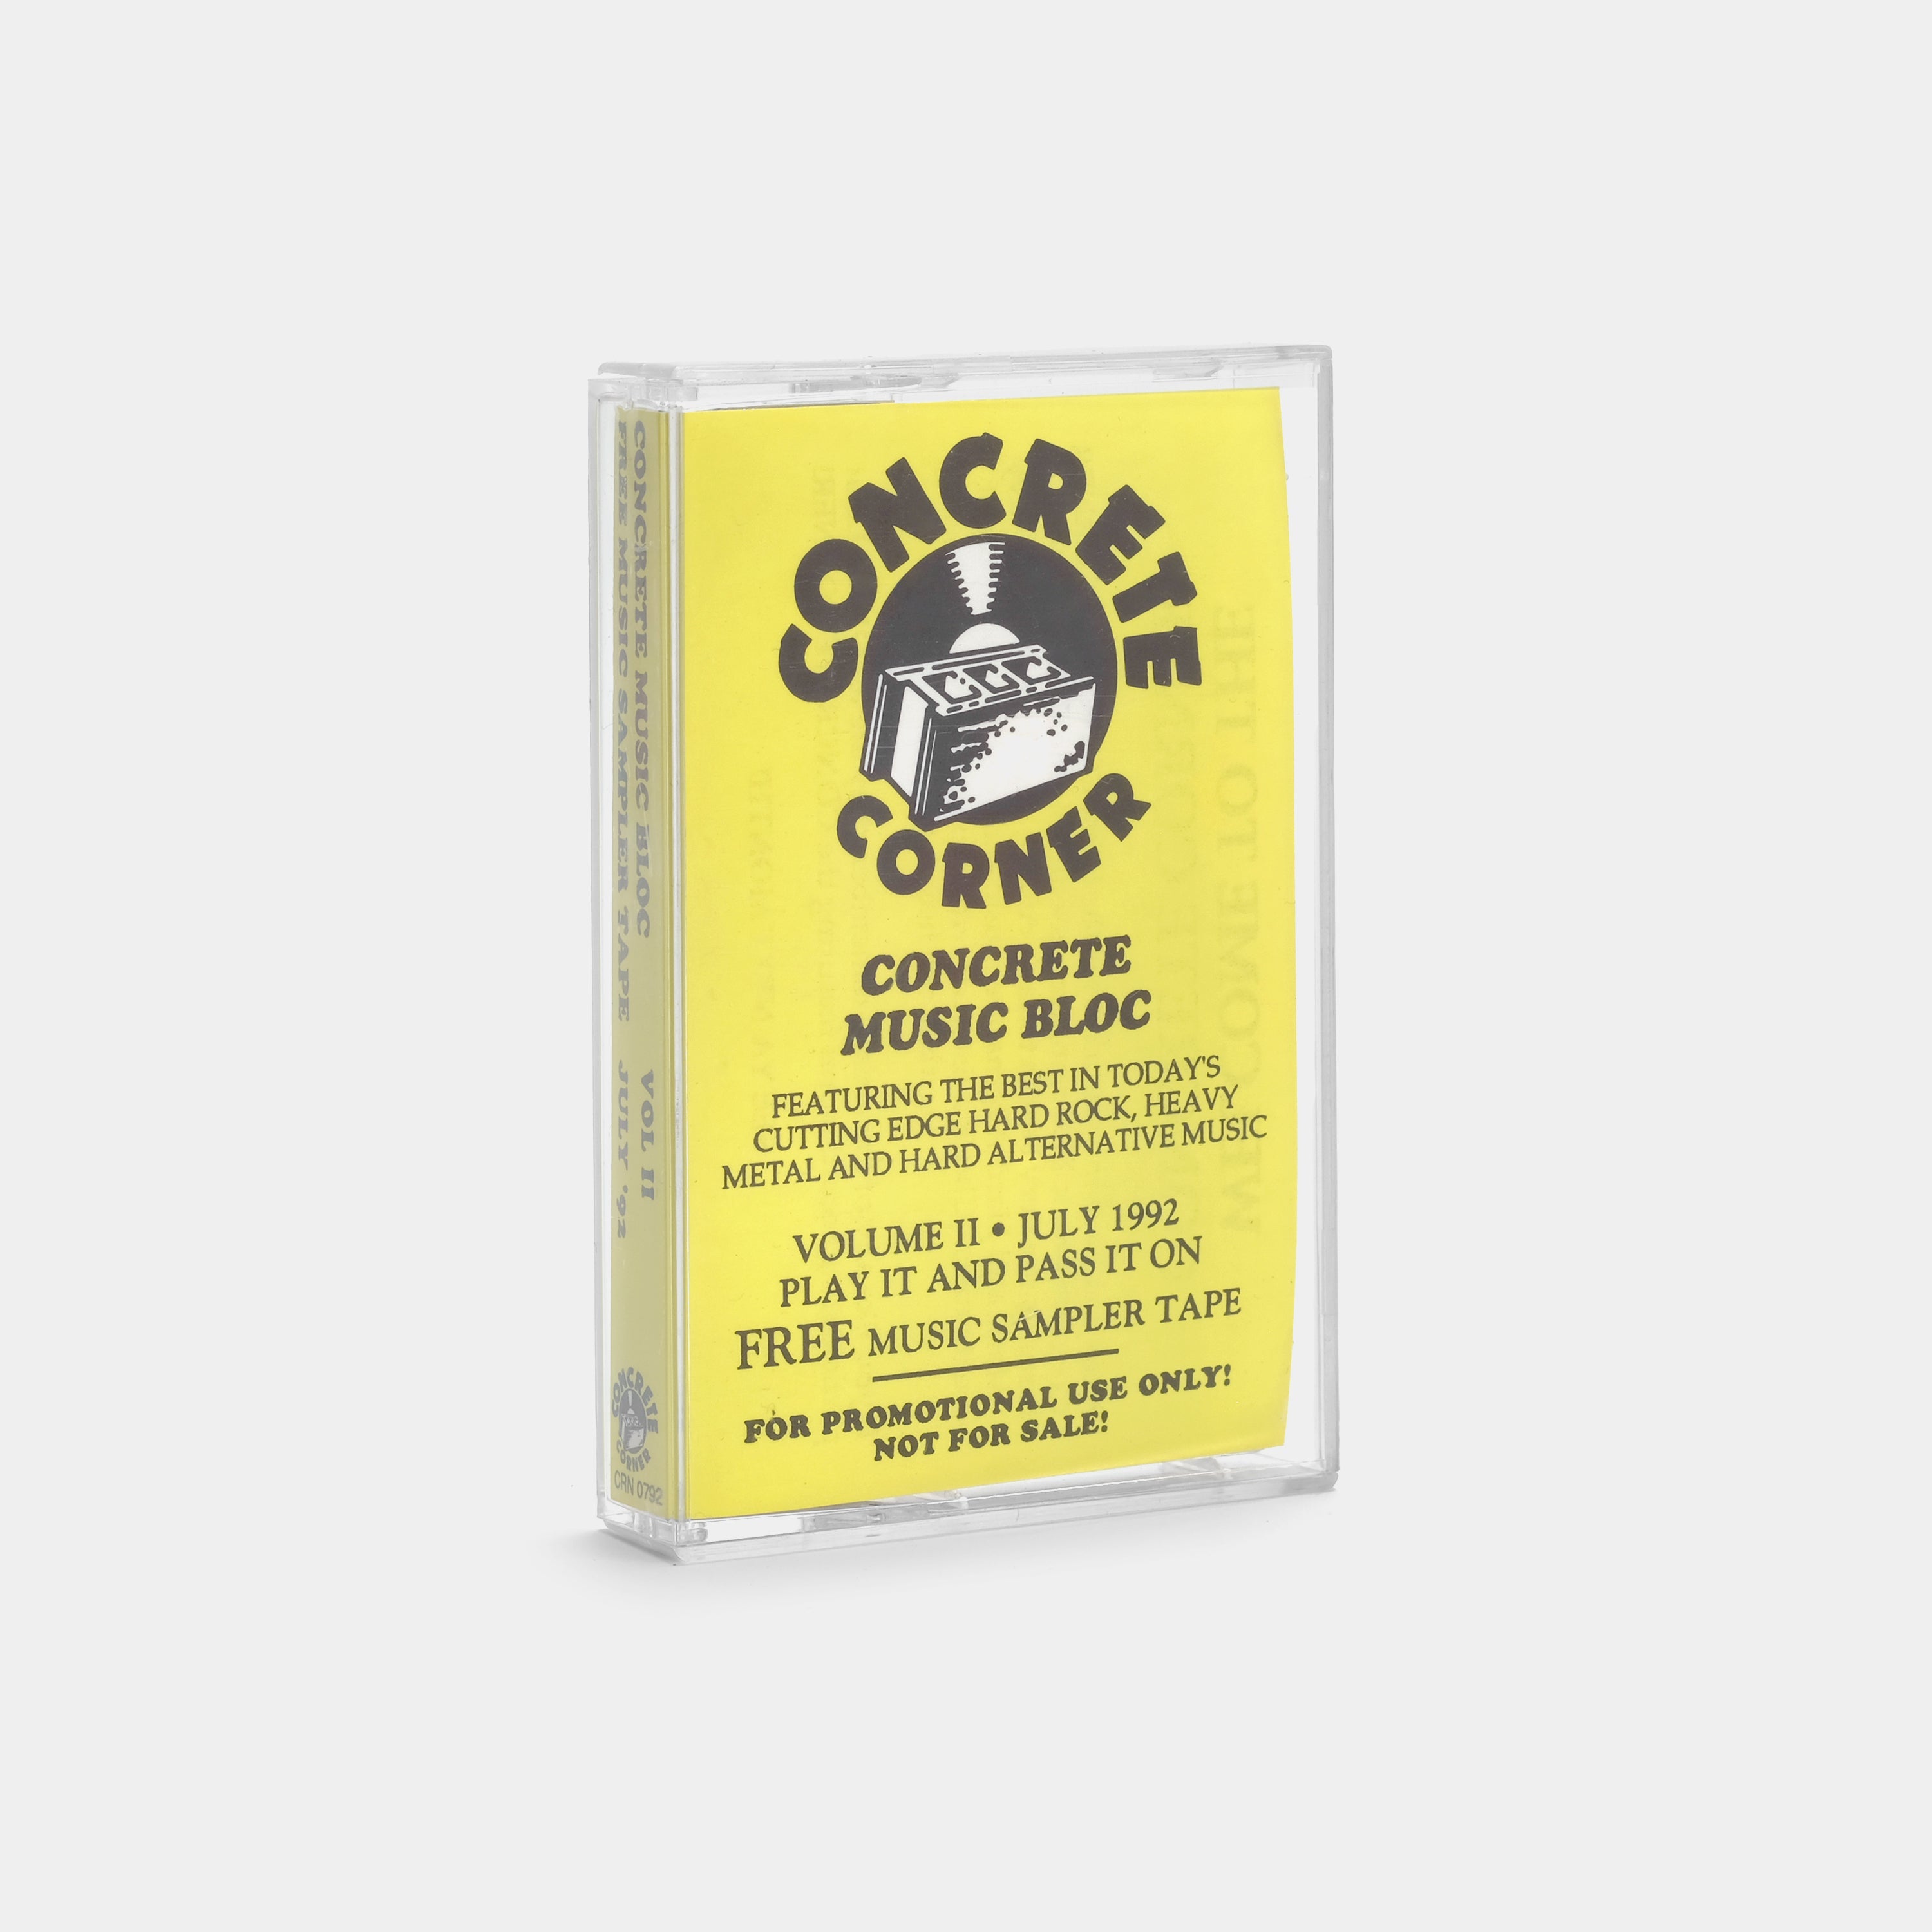 Concrete Corner Music Bloc Vol. II Cassette Tape